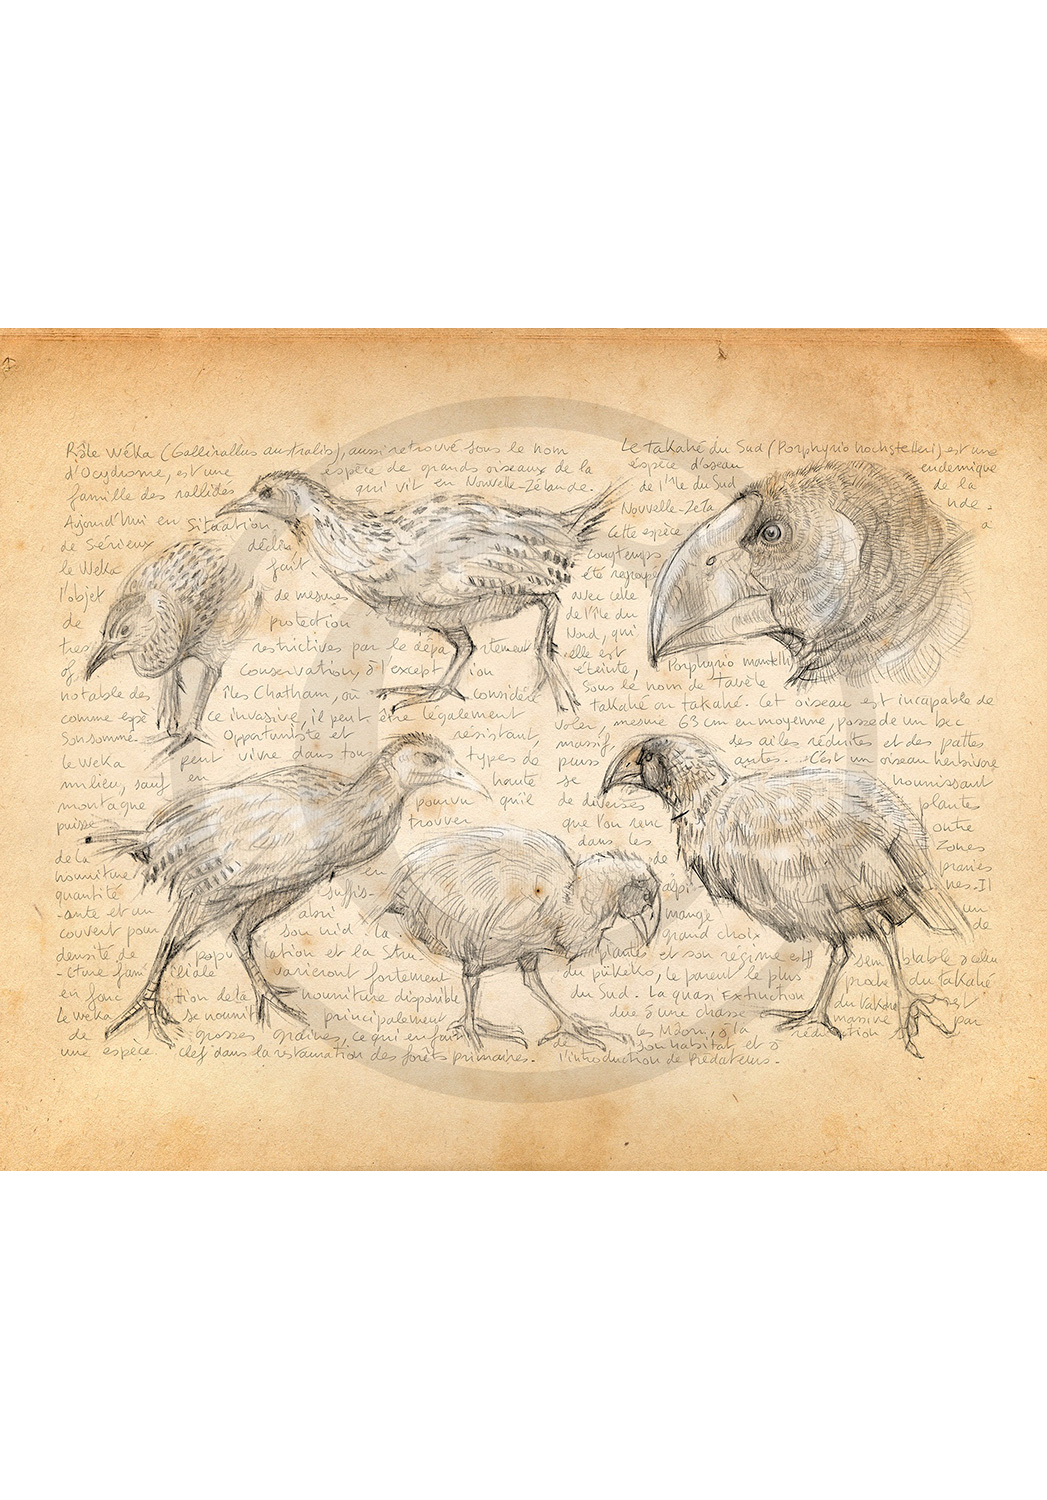 Marcello-art: Ornithology 378 - Weka and takahé